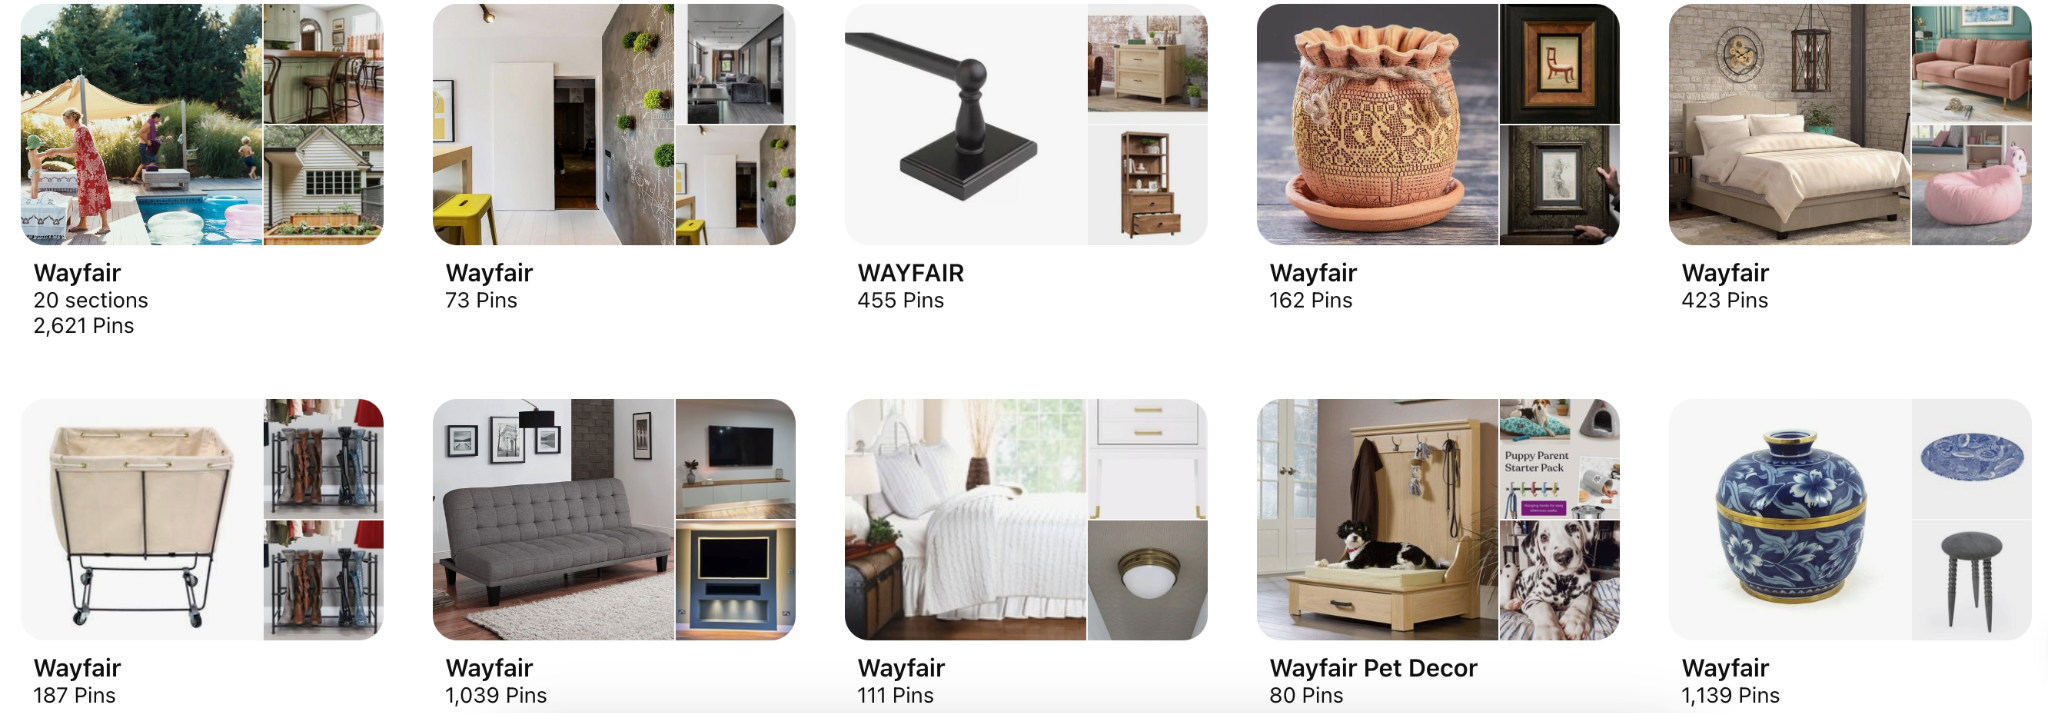 Wayfair products